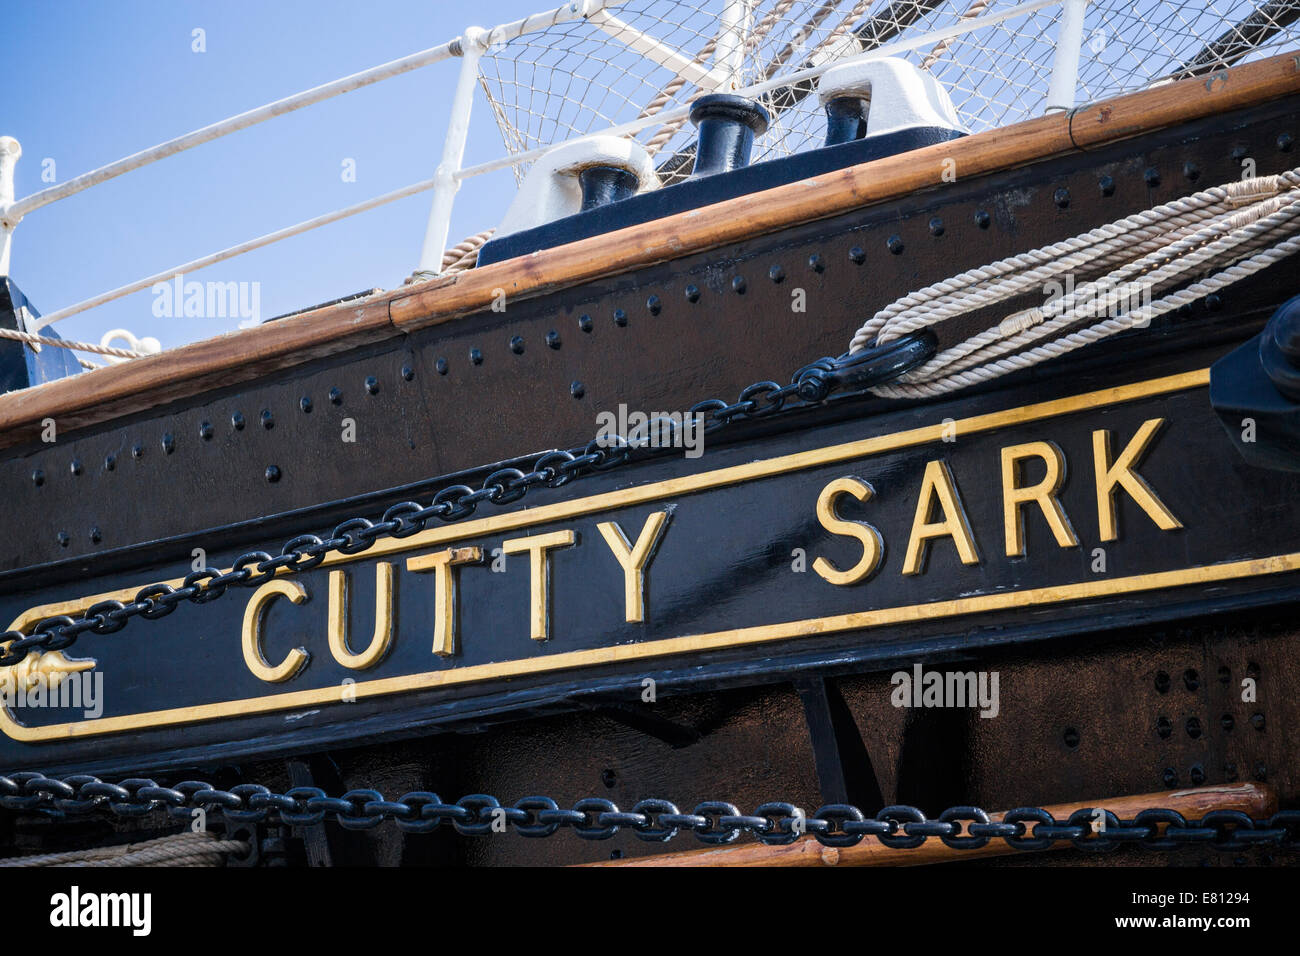 Cutty Sark Tea Clipper - London Stock Photo